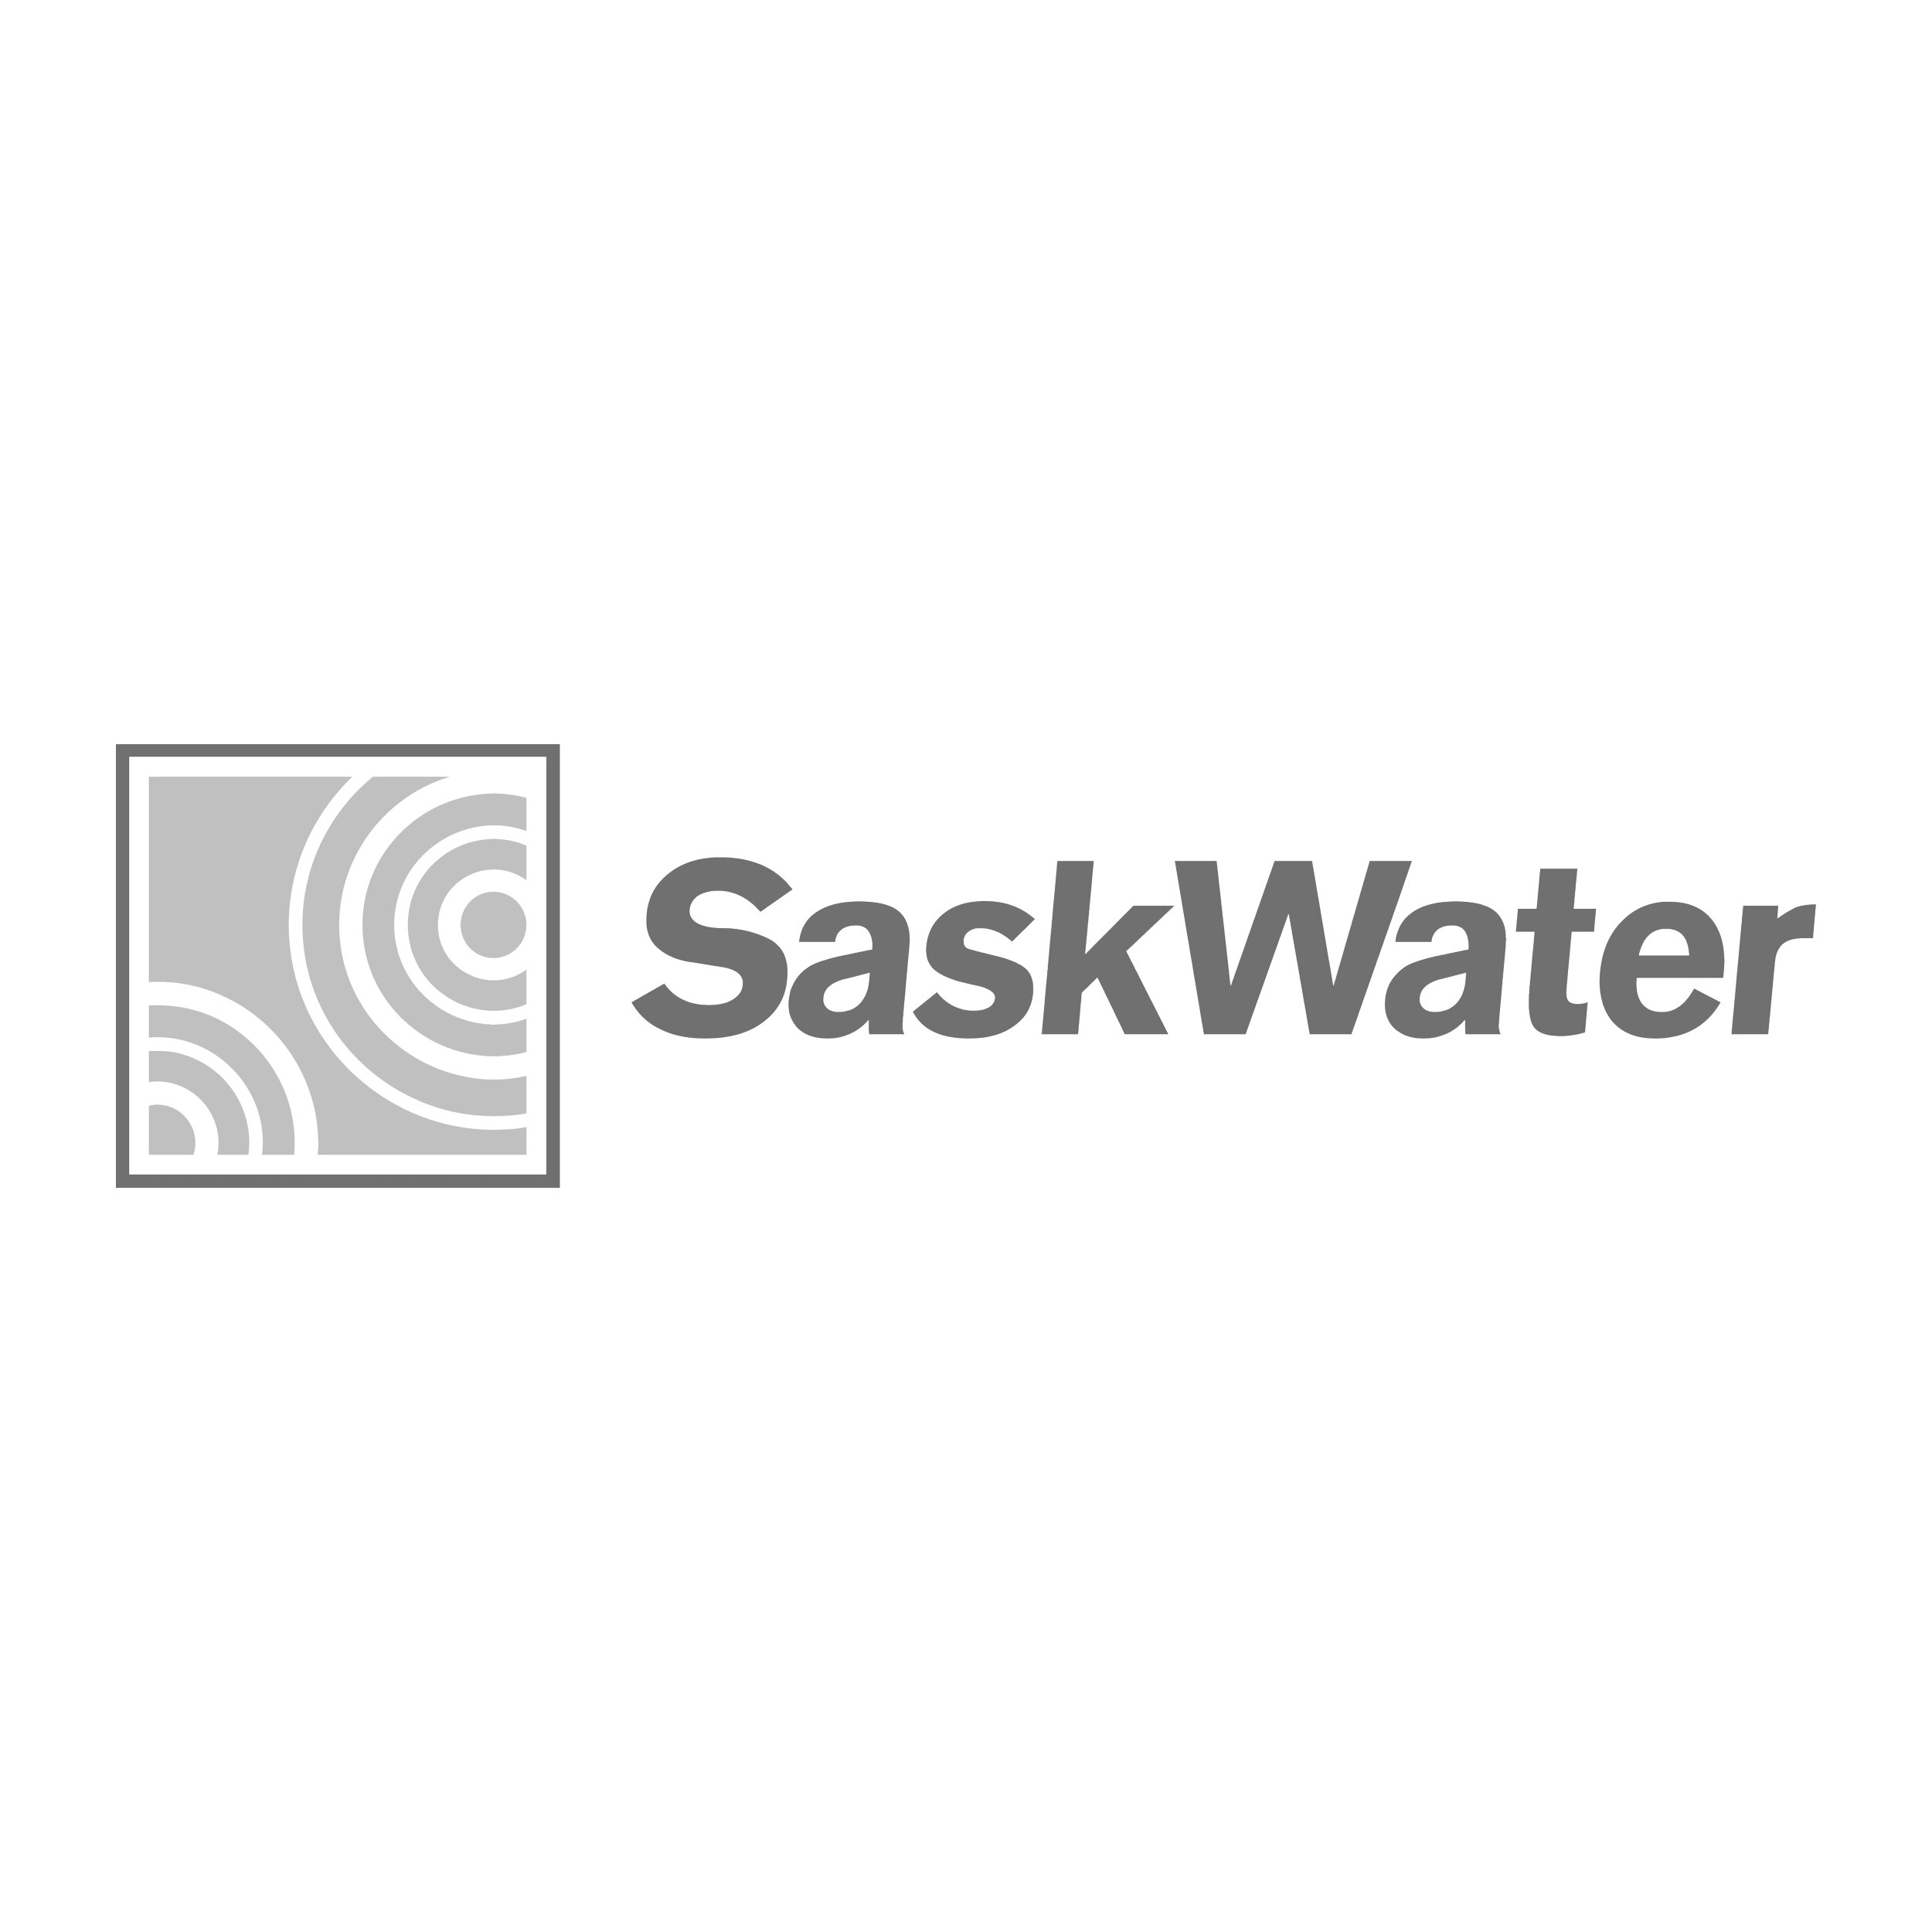 Sask Water HR